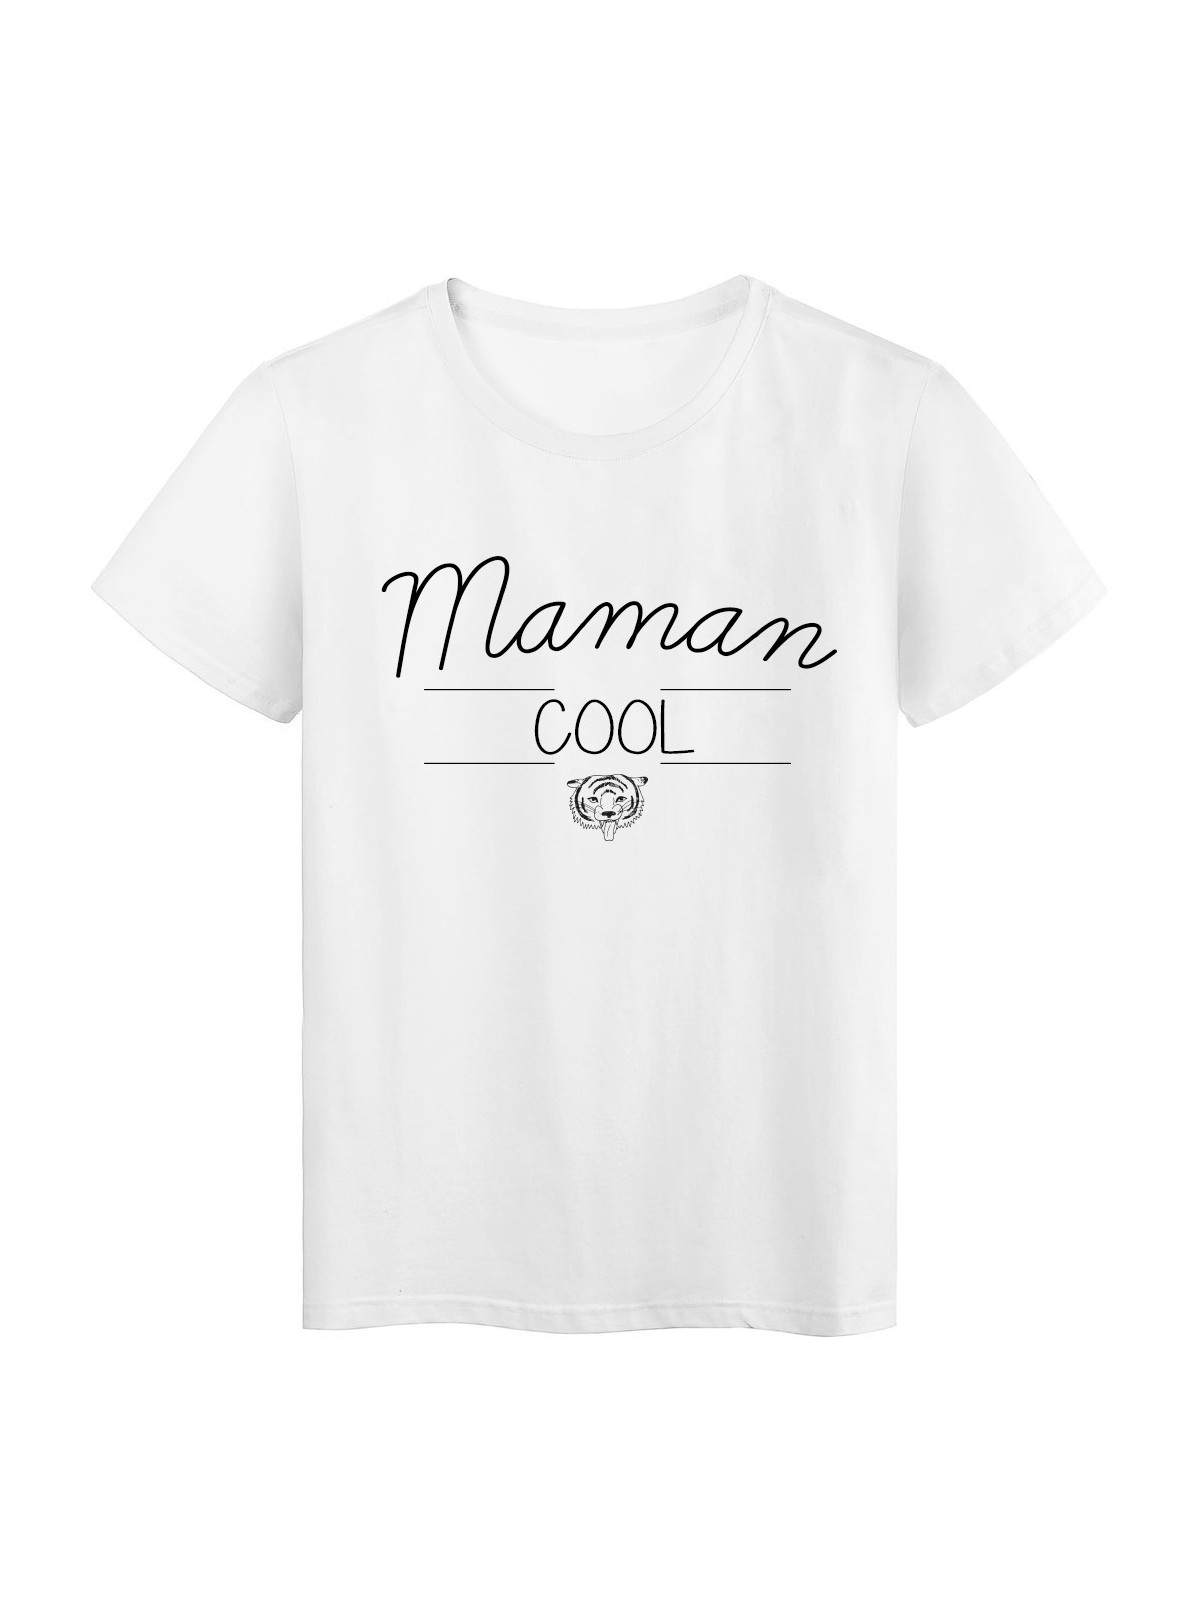 T-Shirt imprimÃ© humour design Maman Cool rÃ©f 2187